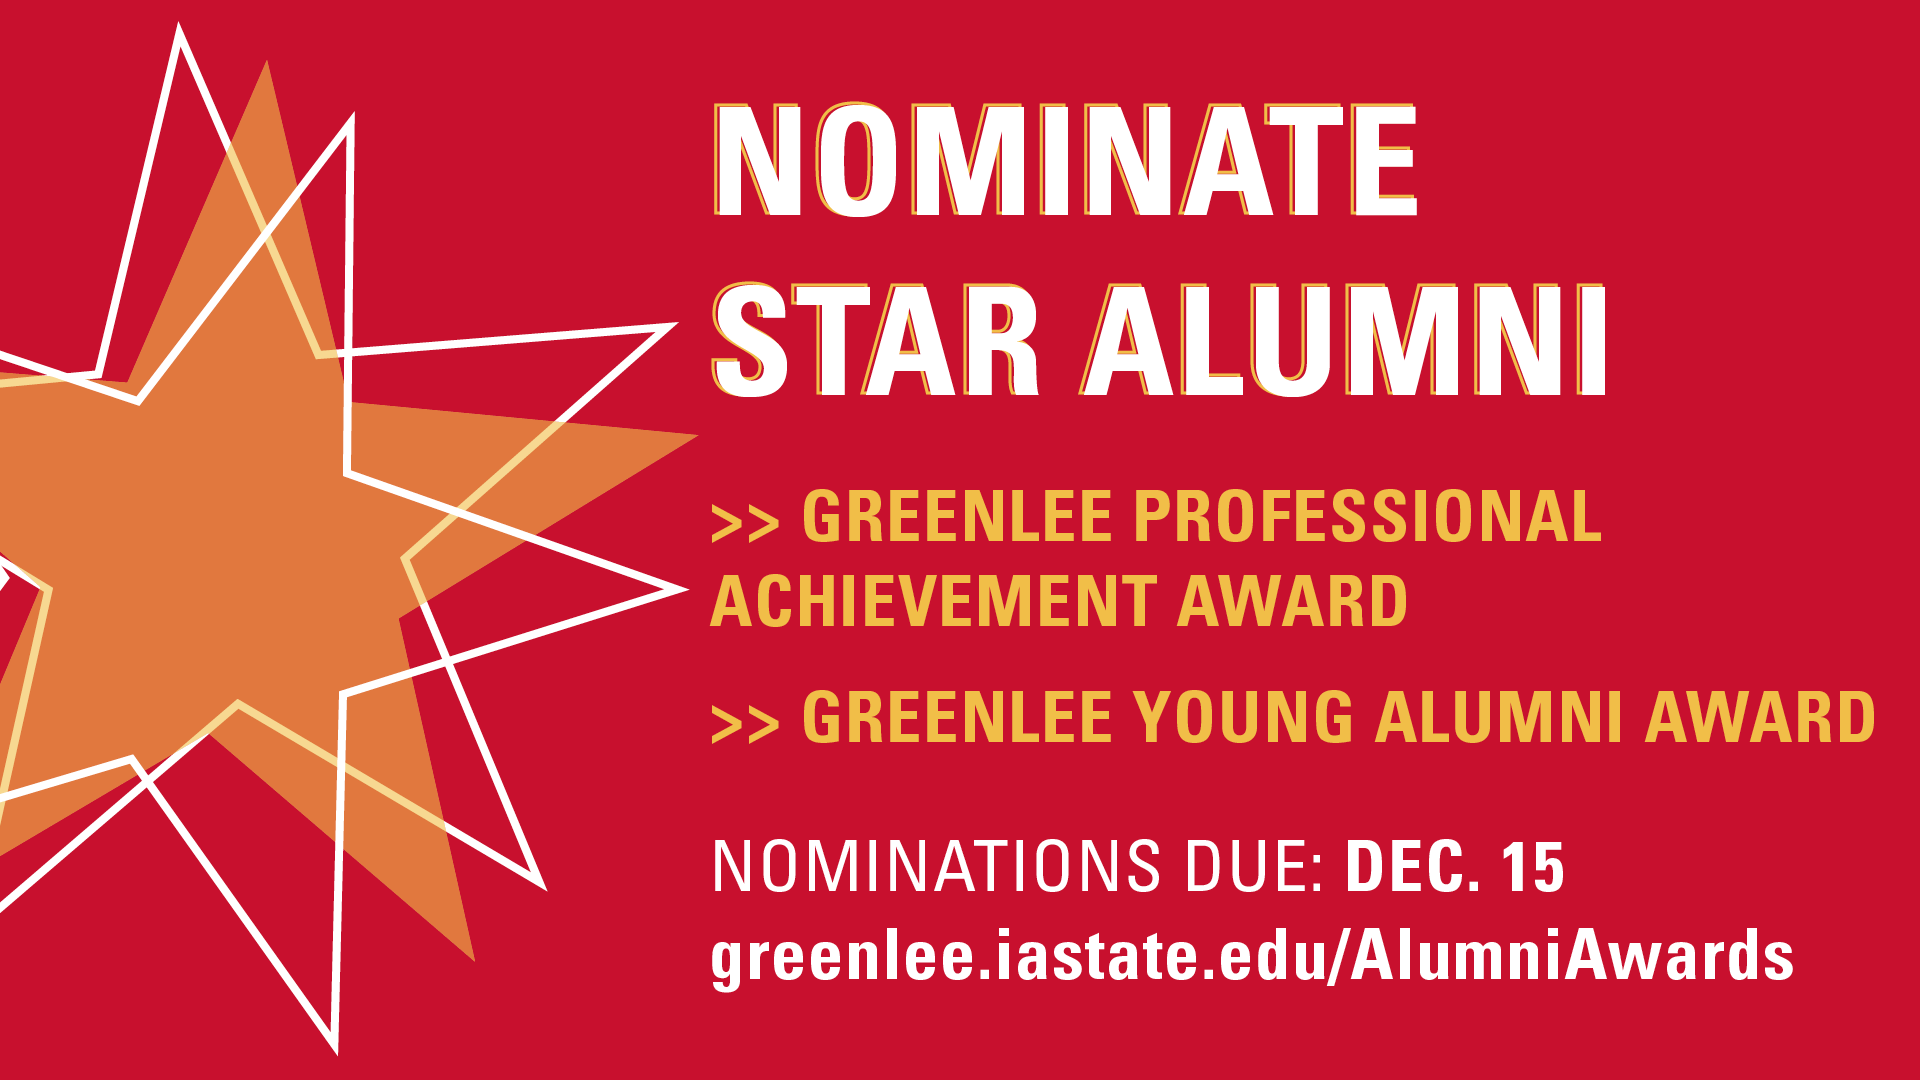 Nominate Star Alumni by Dec. 15, 2021